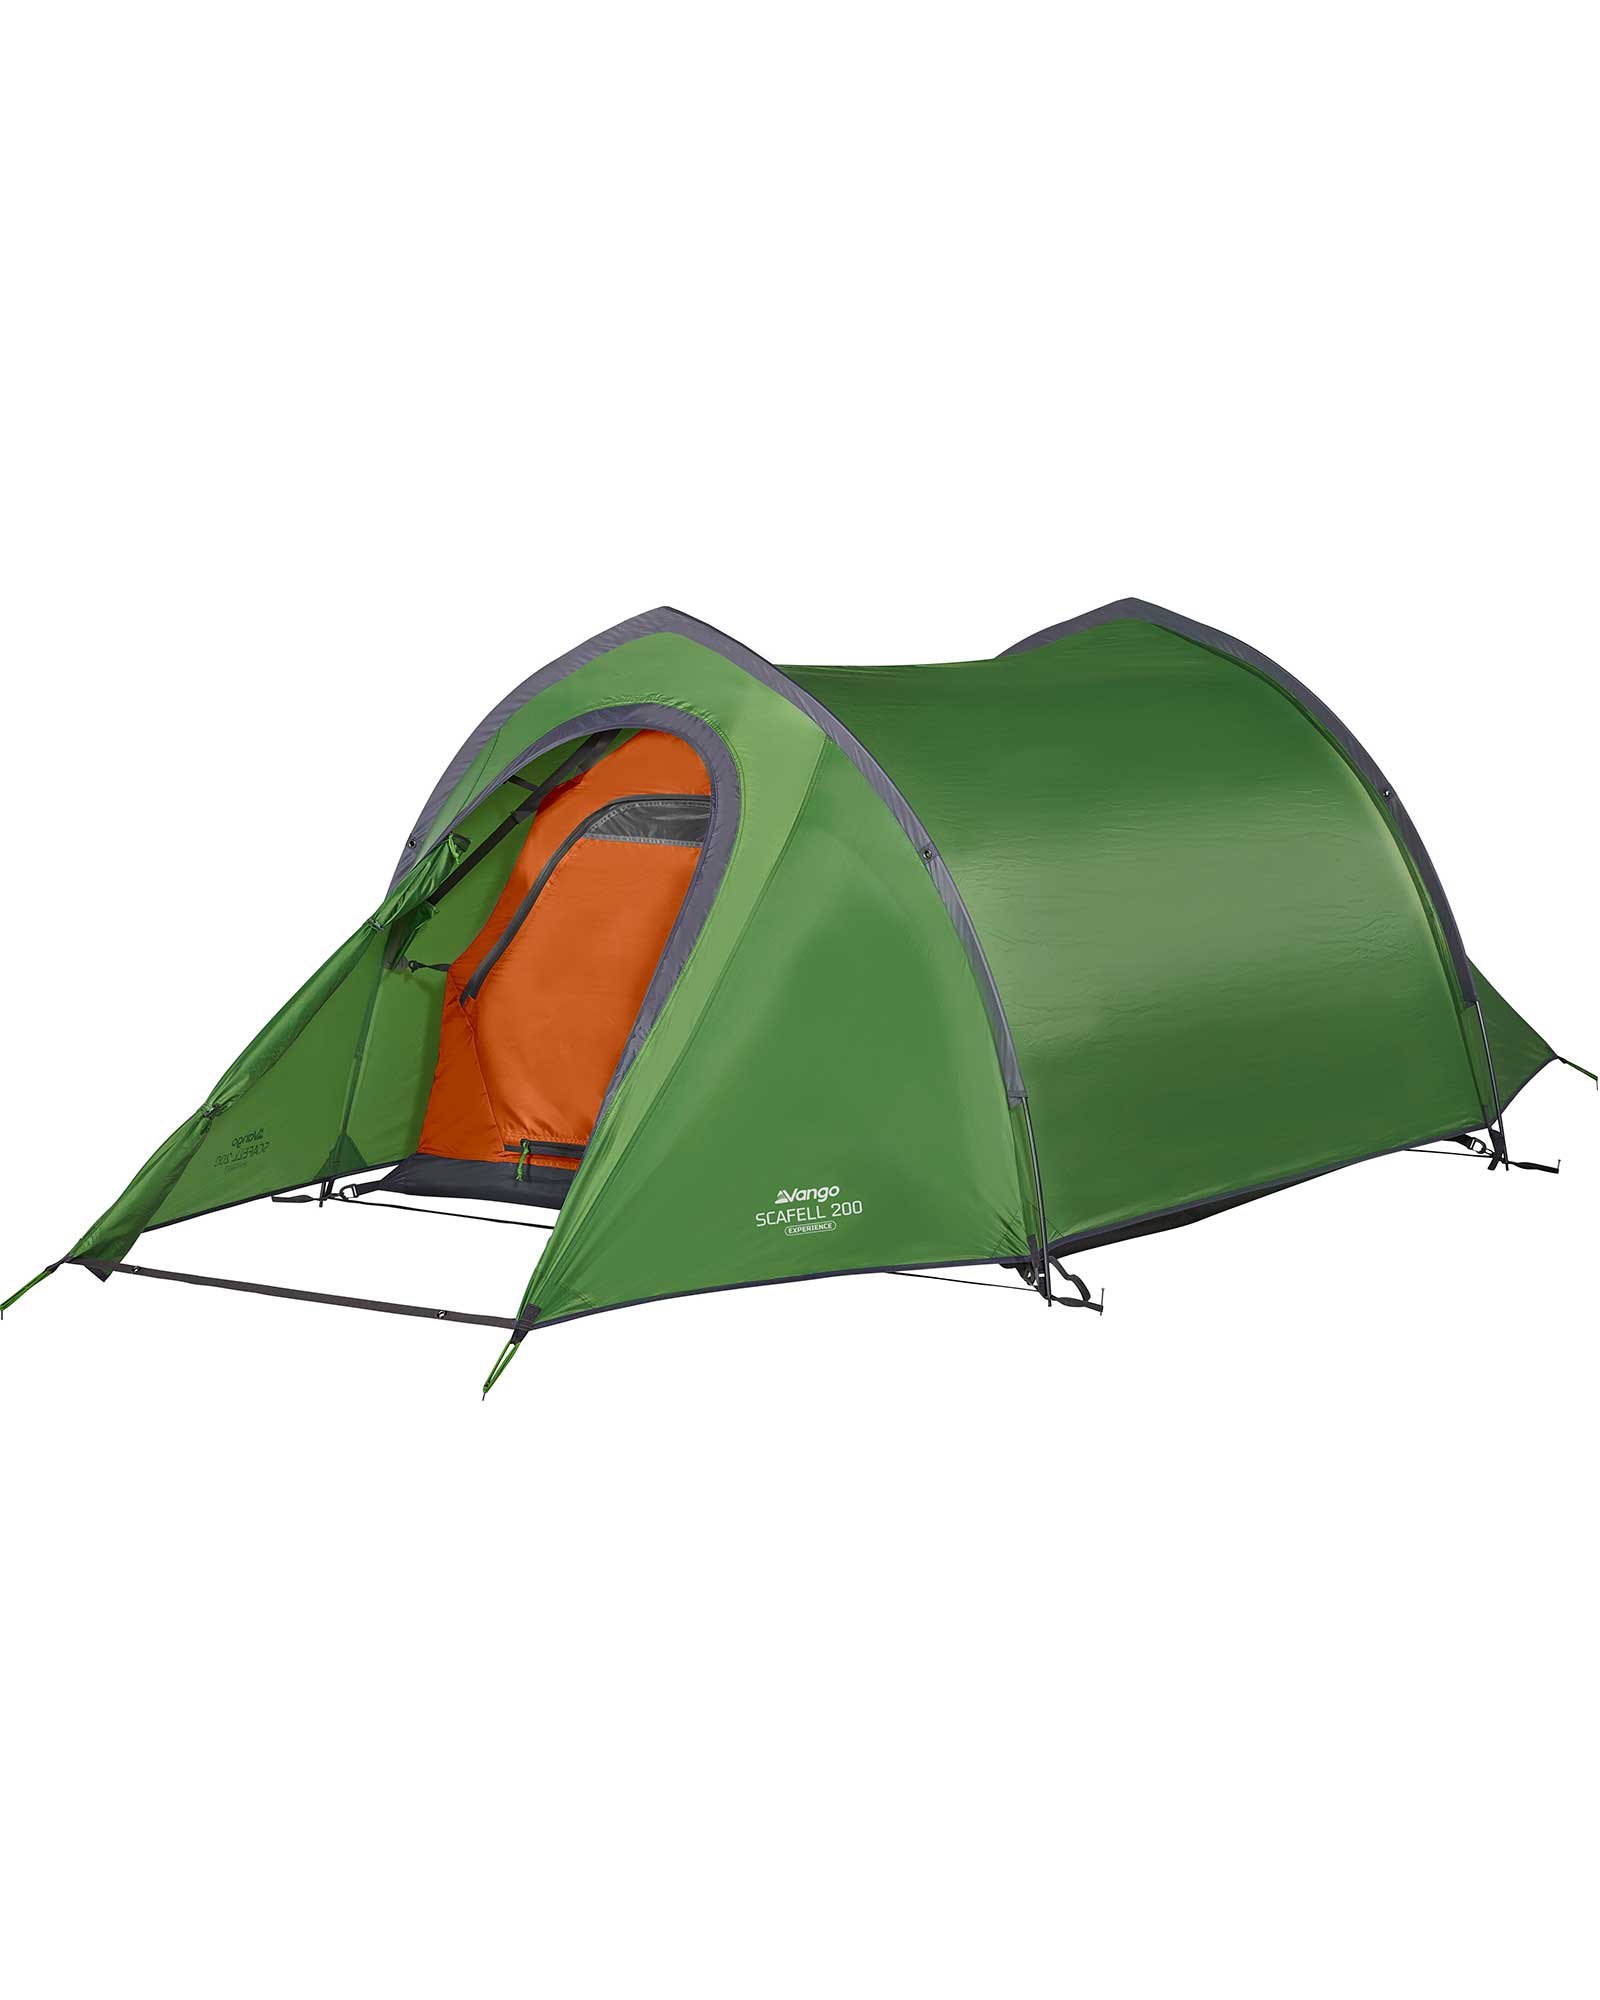 Vango Scafell 200 Tent - Pamir Green